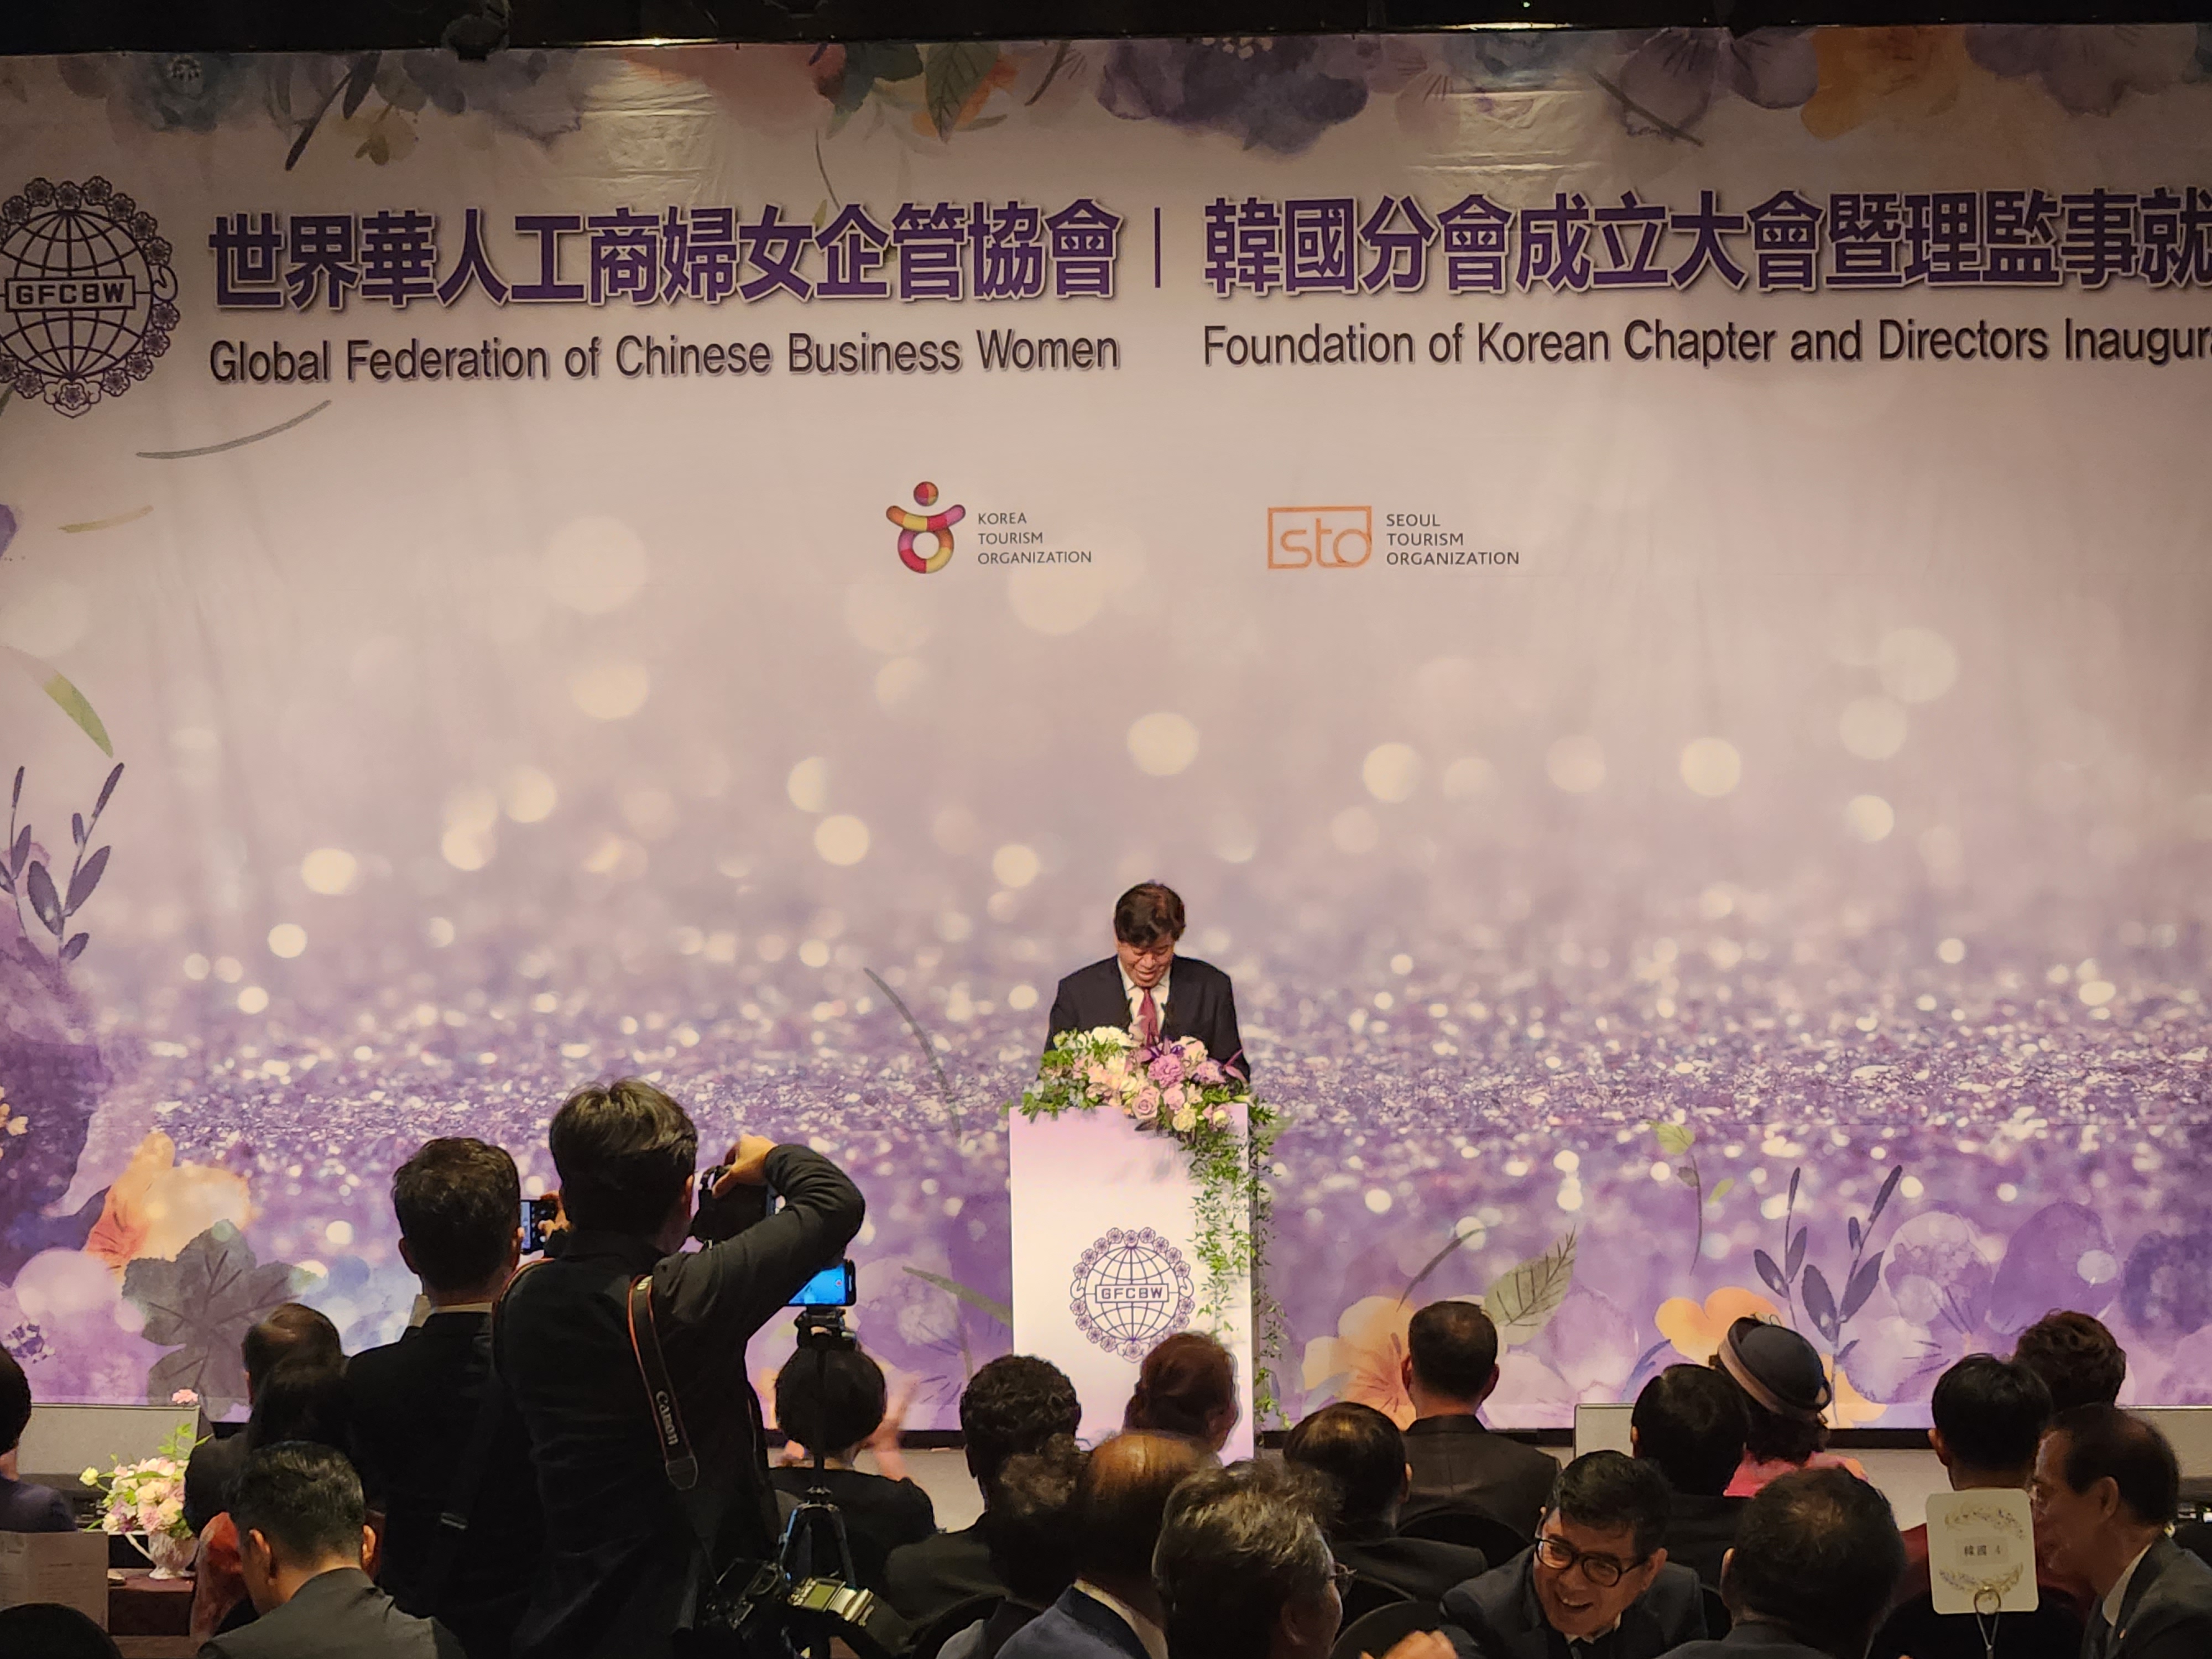 GFCBW 한국지부 창립 및 이사 취임식